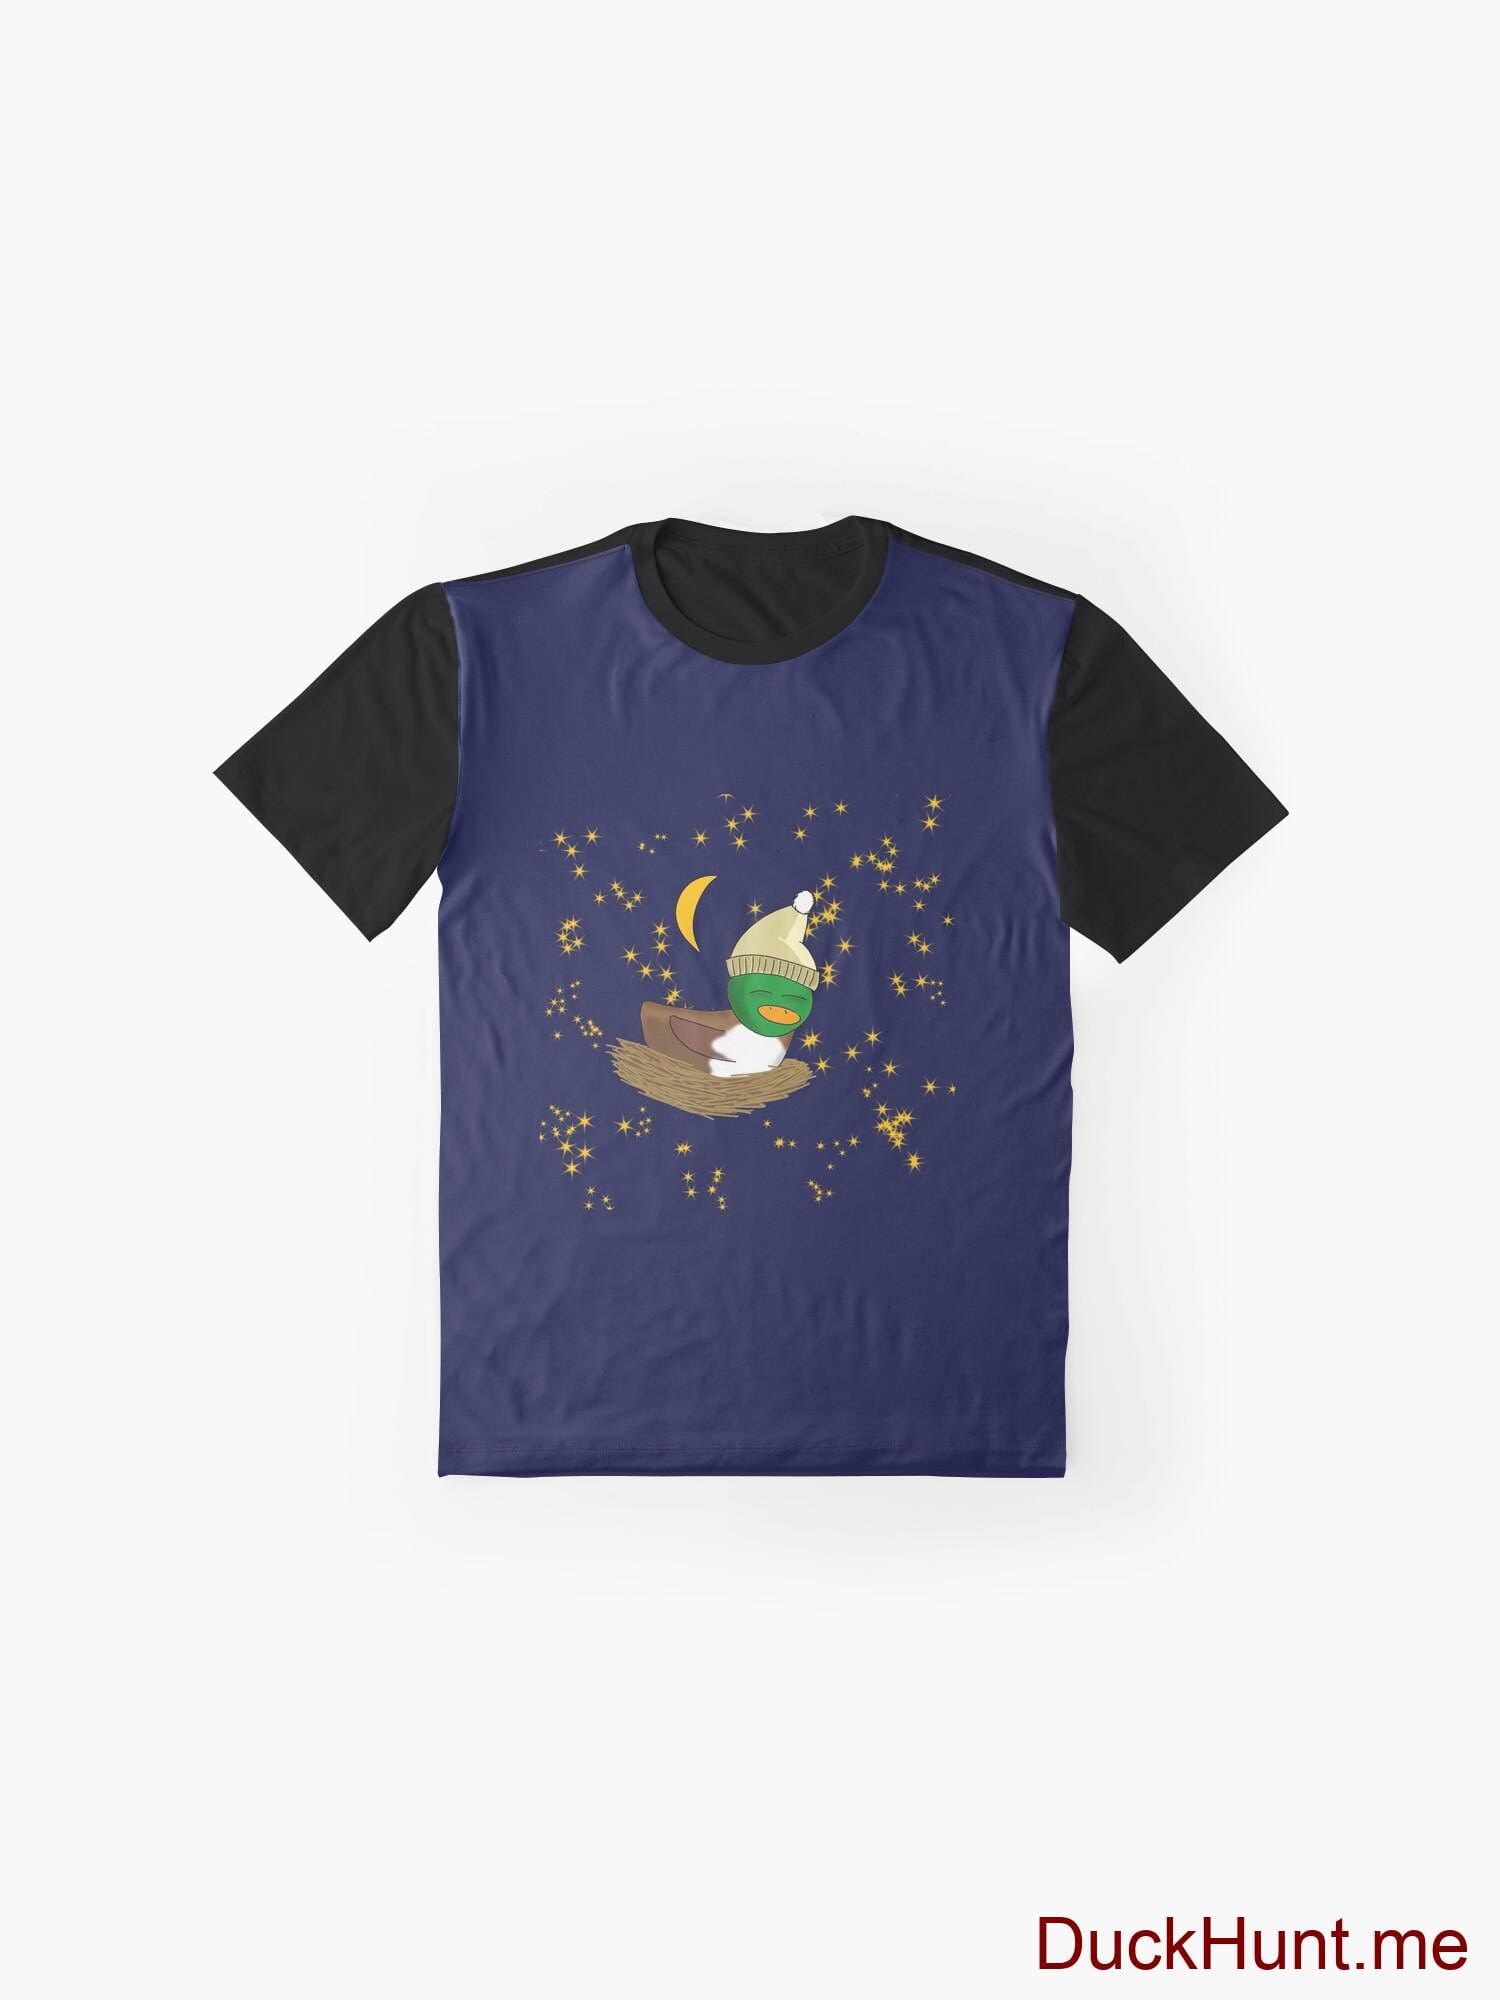 Night Duck Black Graphic T-Shirt alternative image 3